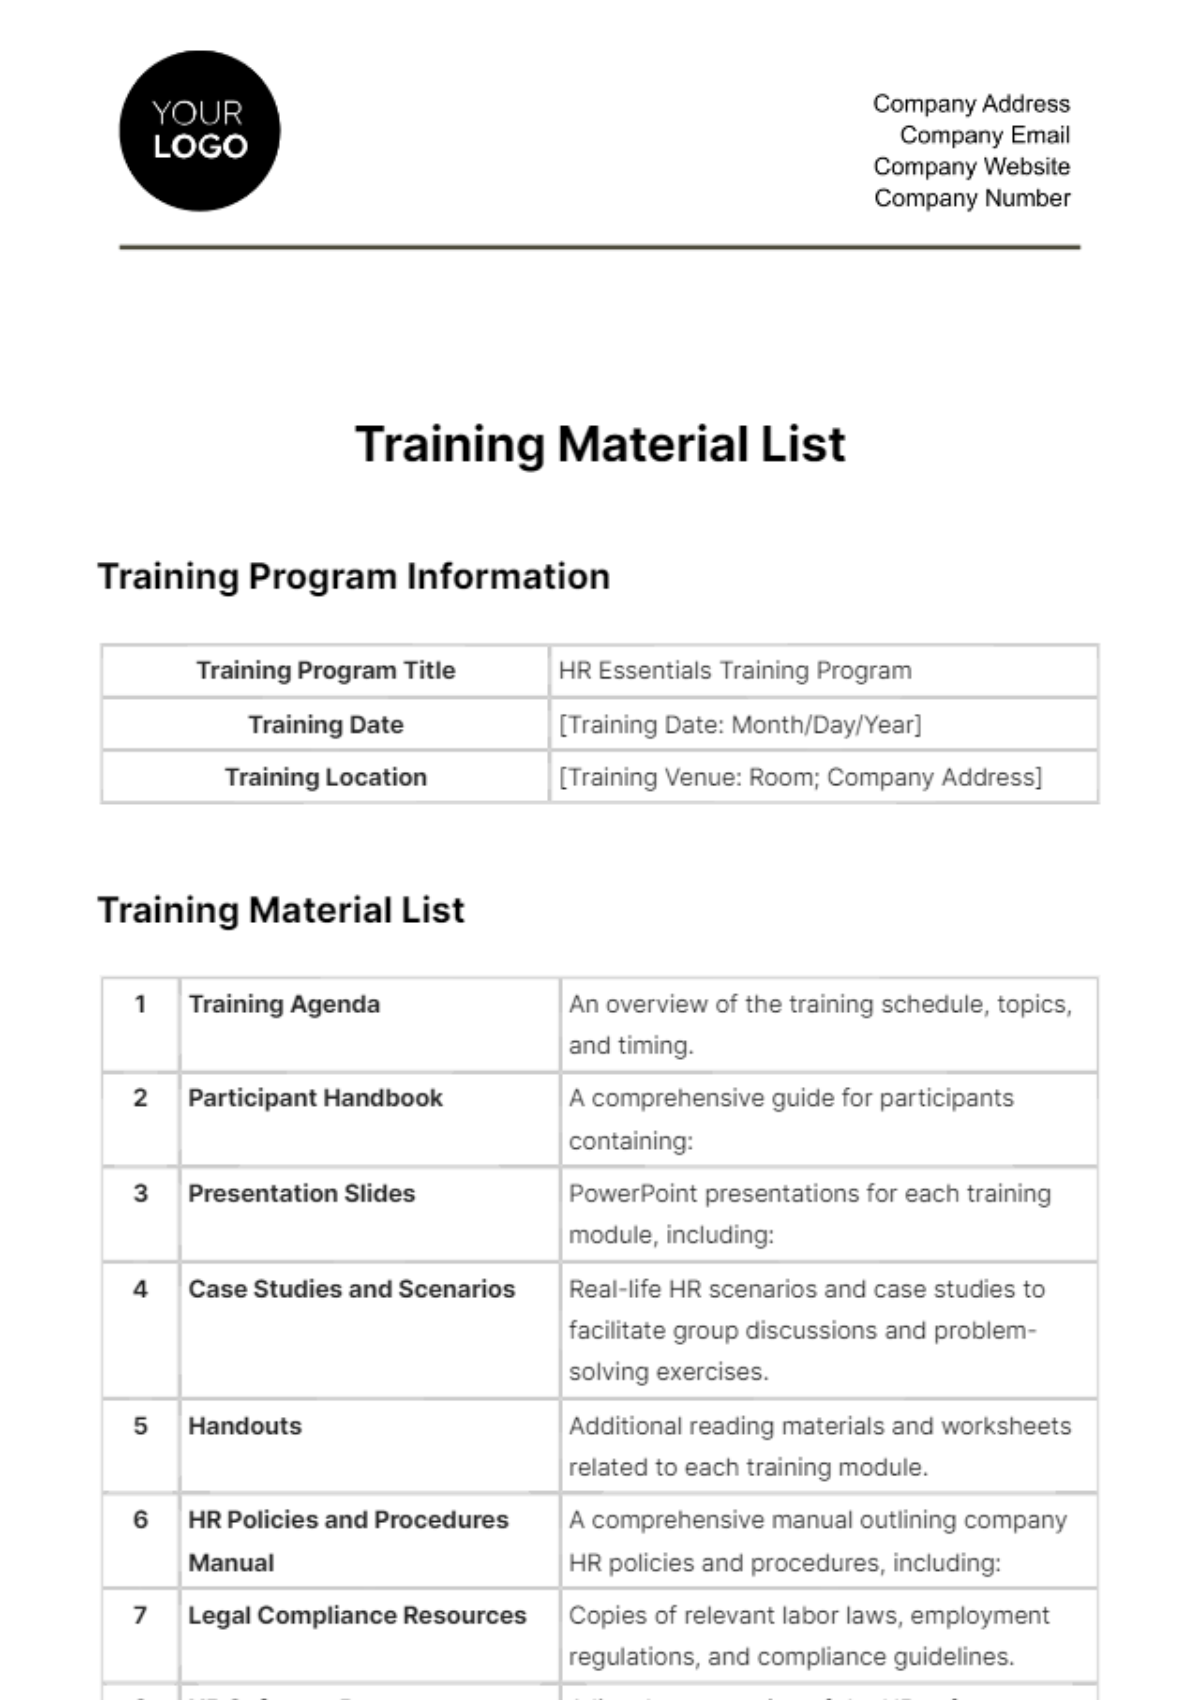 Training Material List HR Template